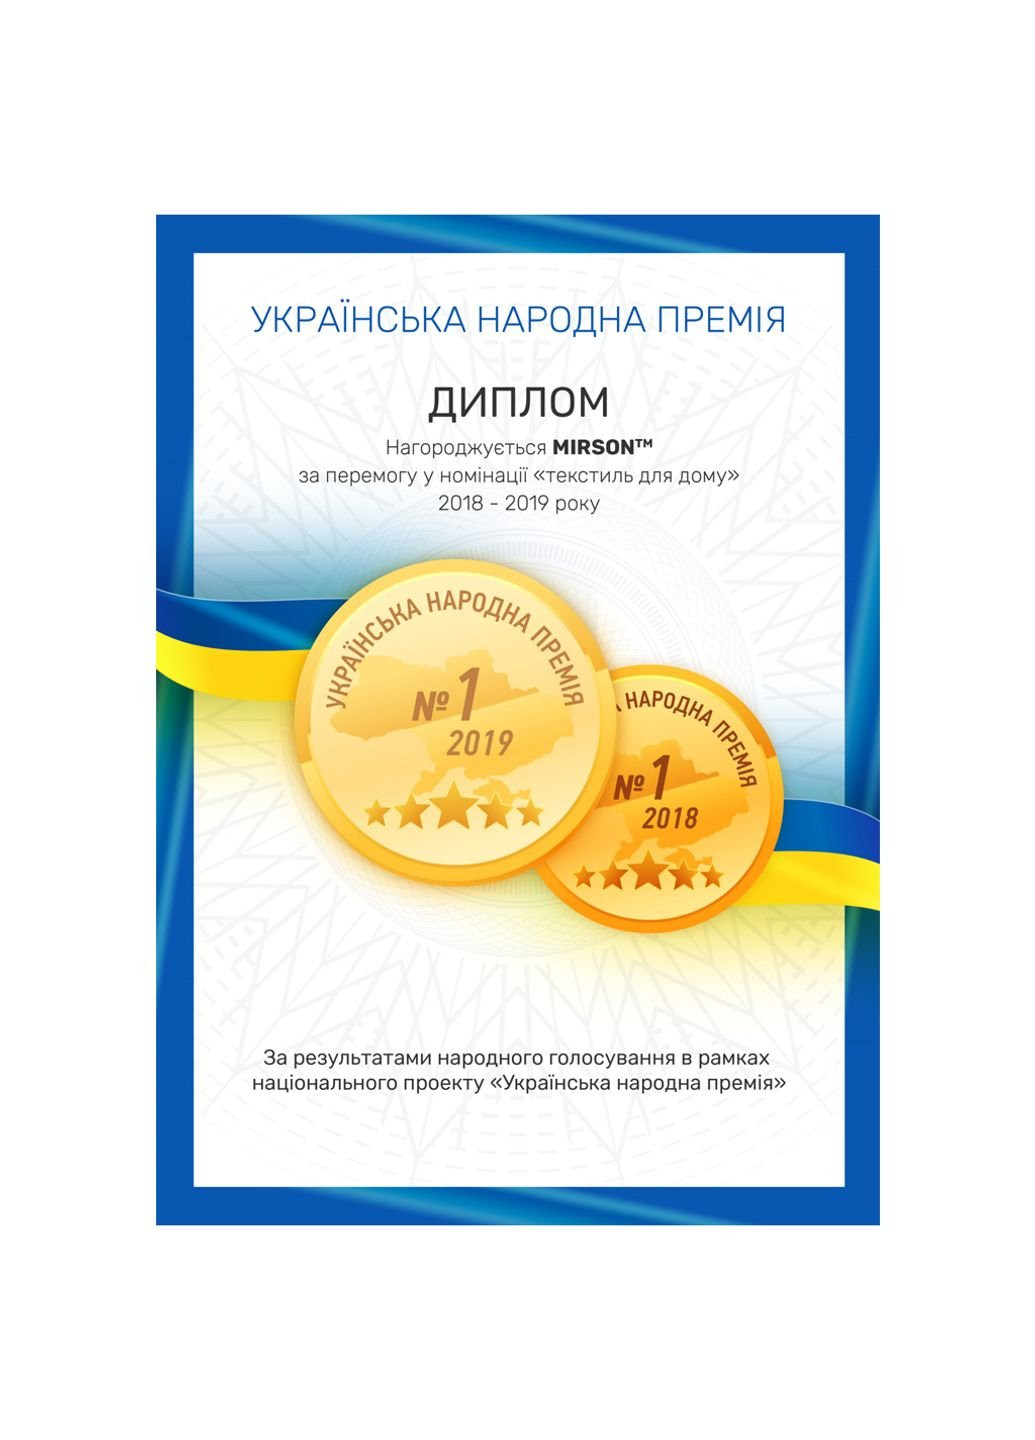 Mirson полотенце банное №5009 softness military 100x150 см (2200003181272) зеленый производство - Украина